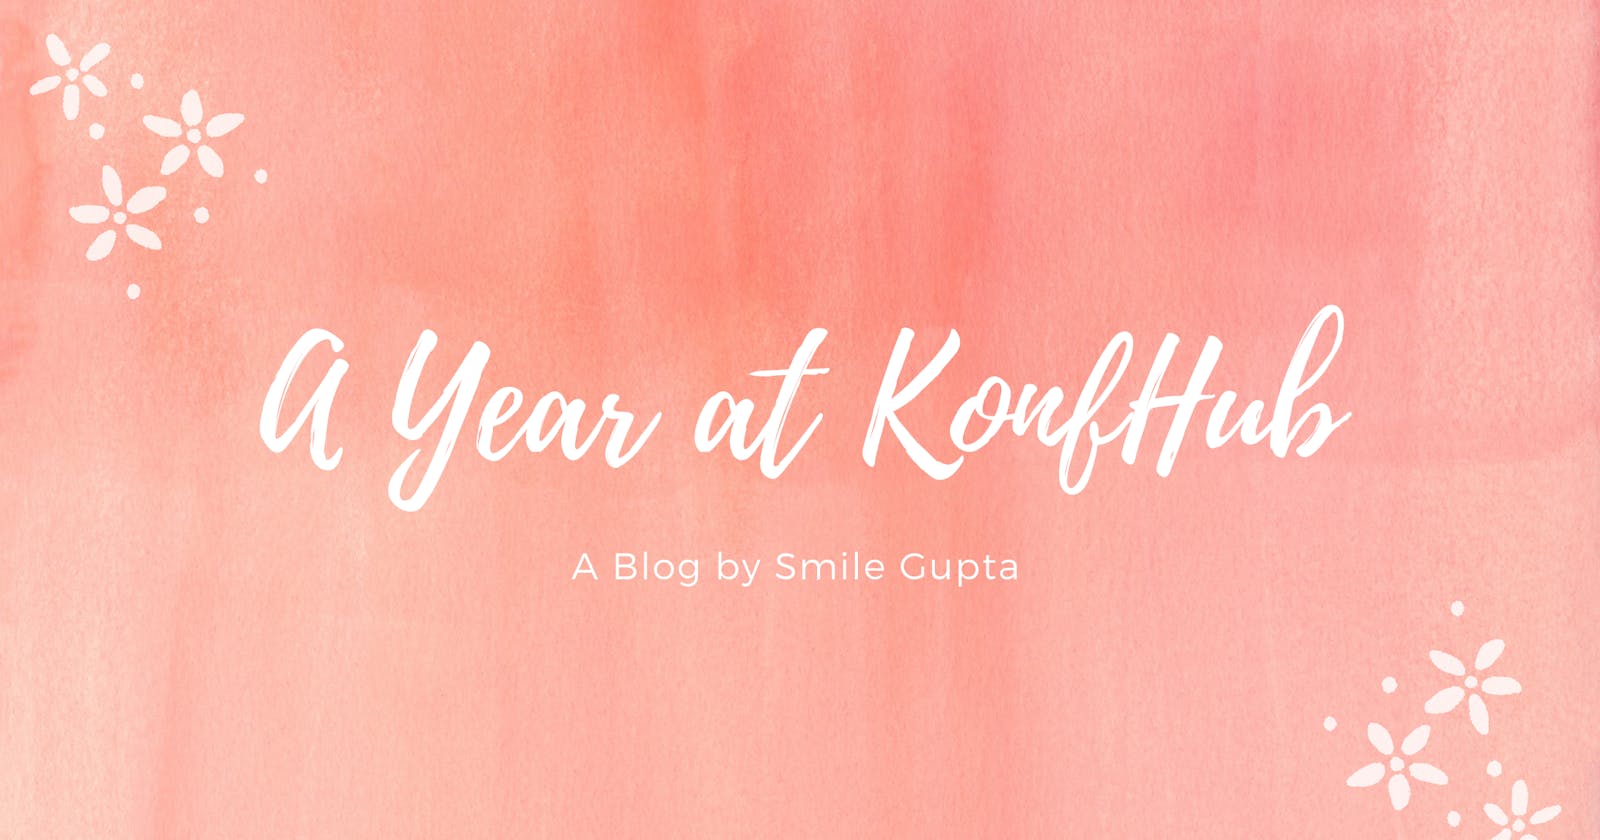 A Year at KonfHub